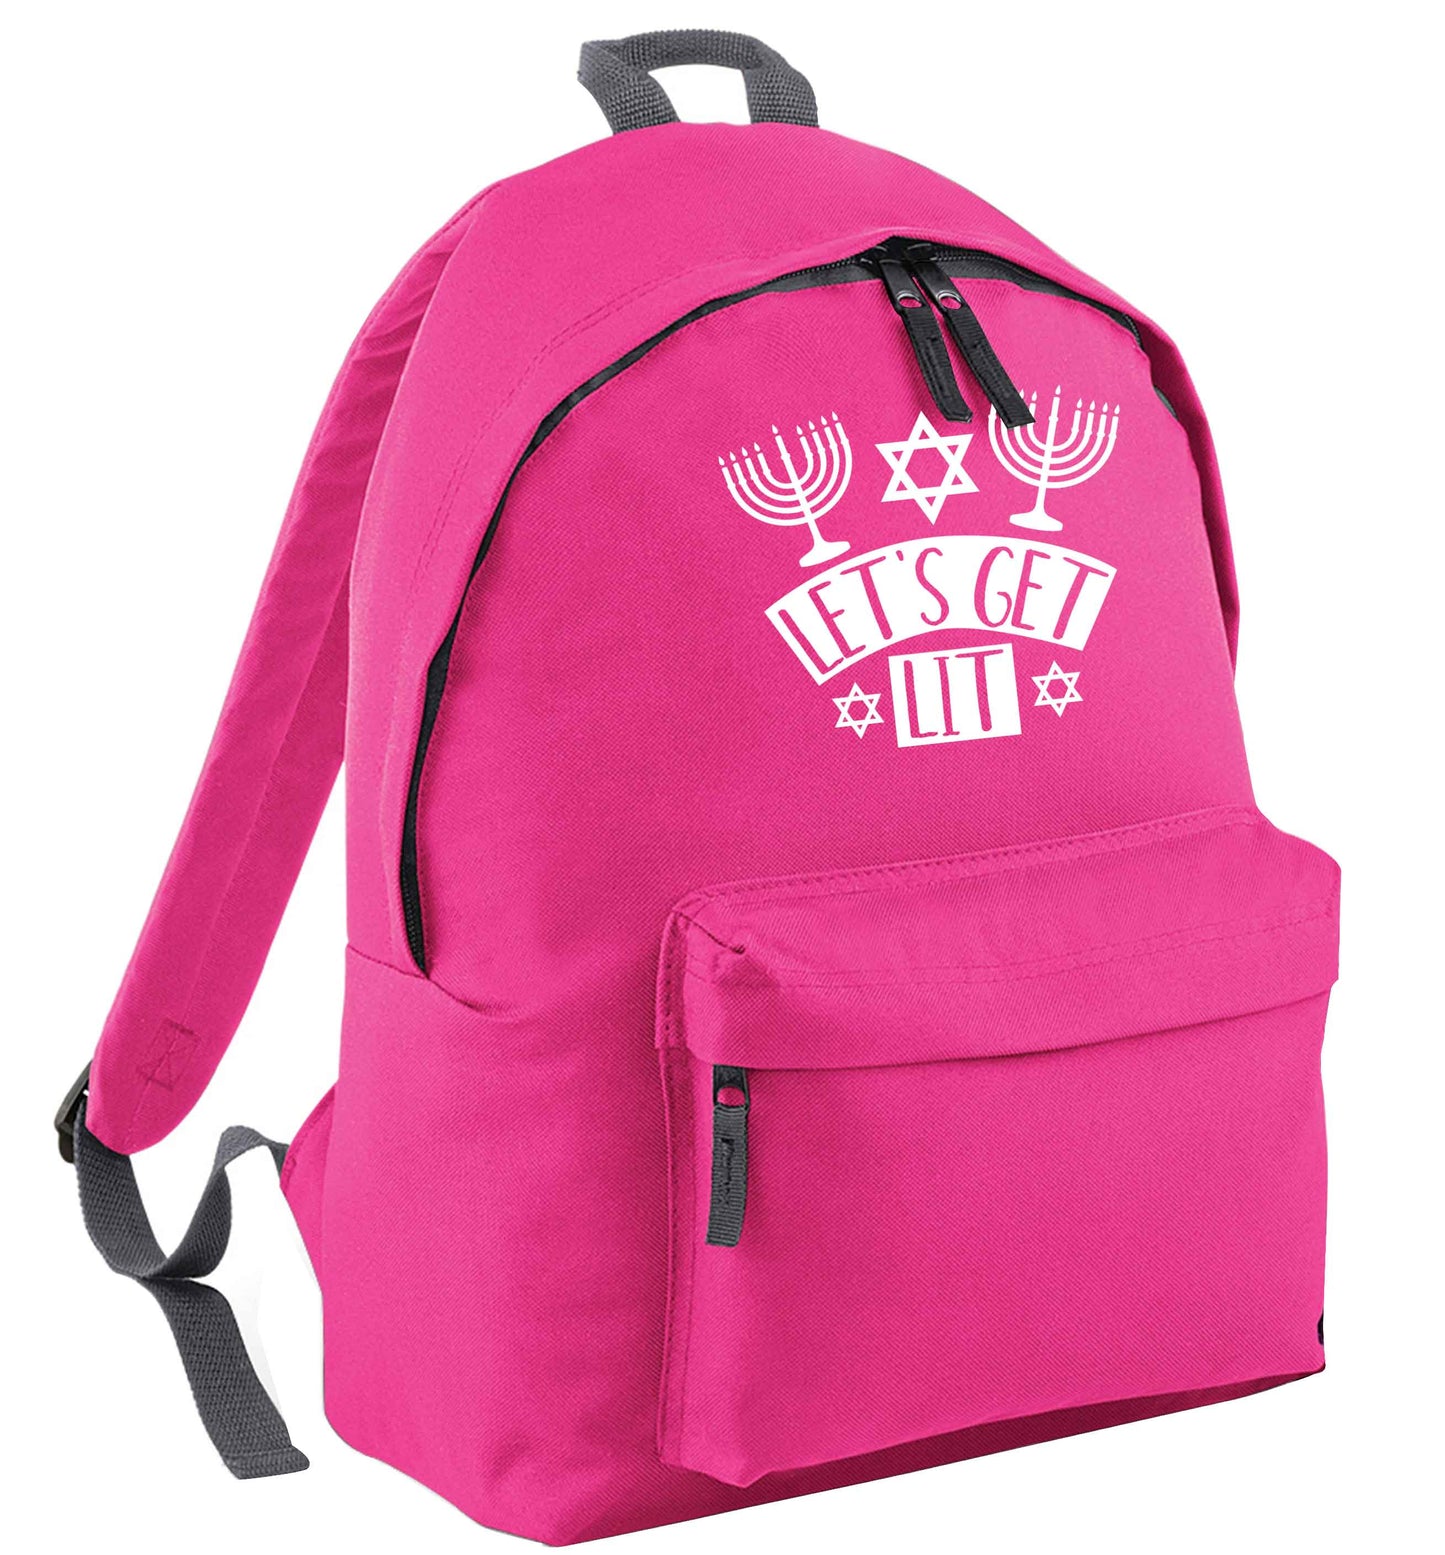 Let's get lit pink adults backpack